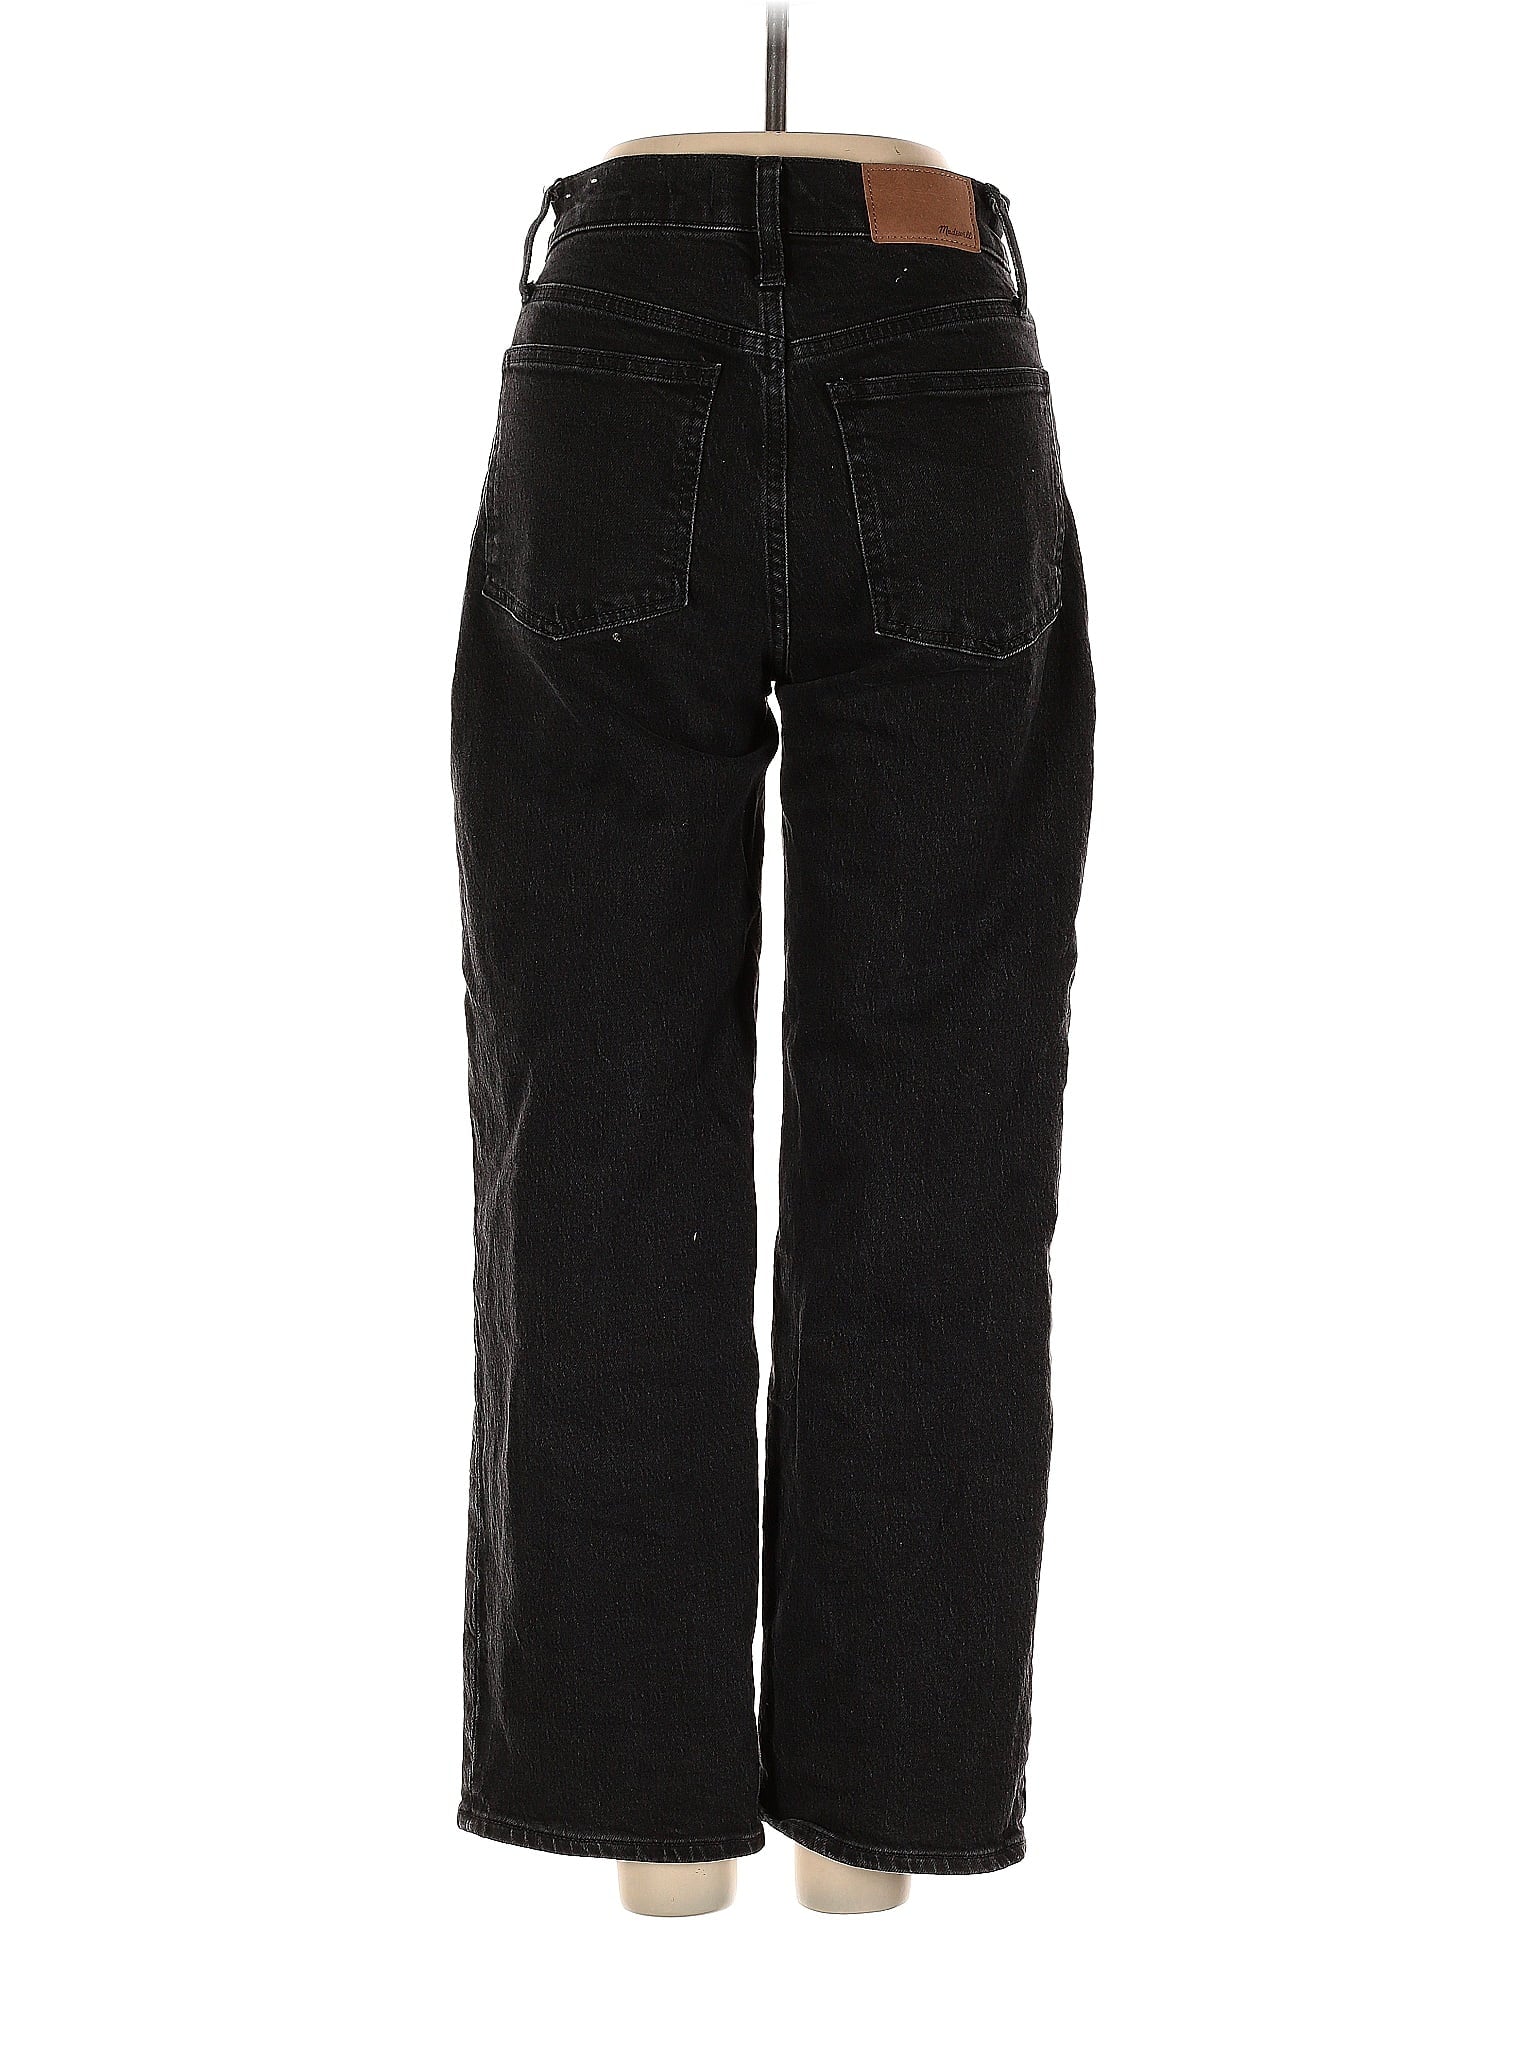 High-Rise Boyjeans Jeans in Dark Wash waist size - 23 P